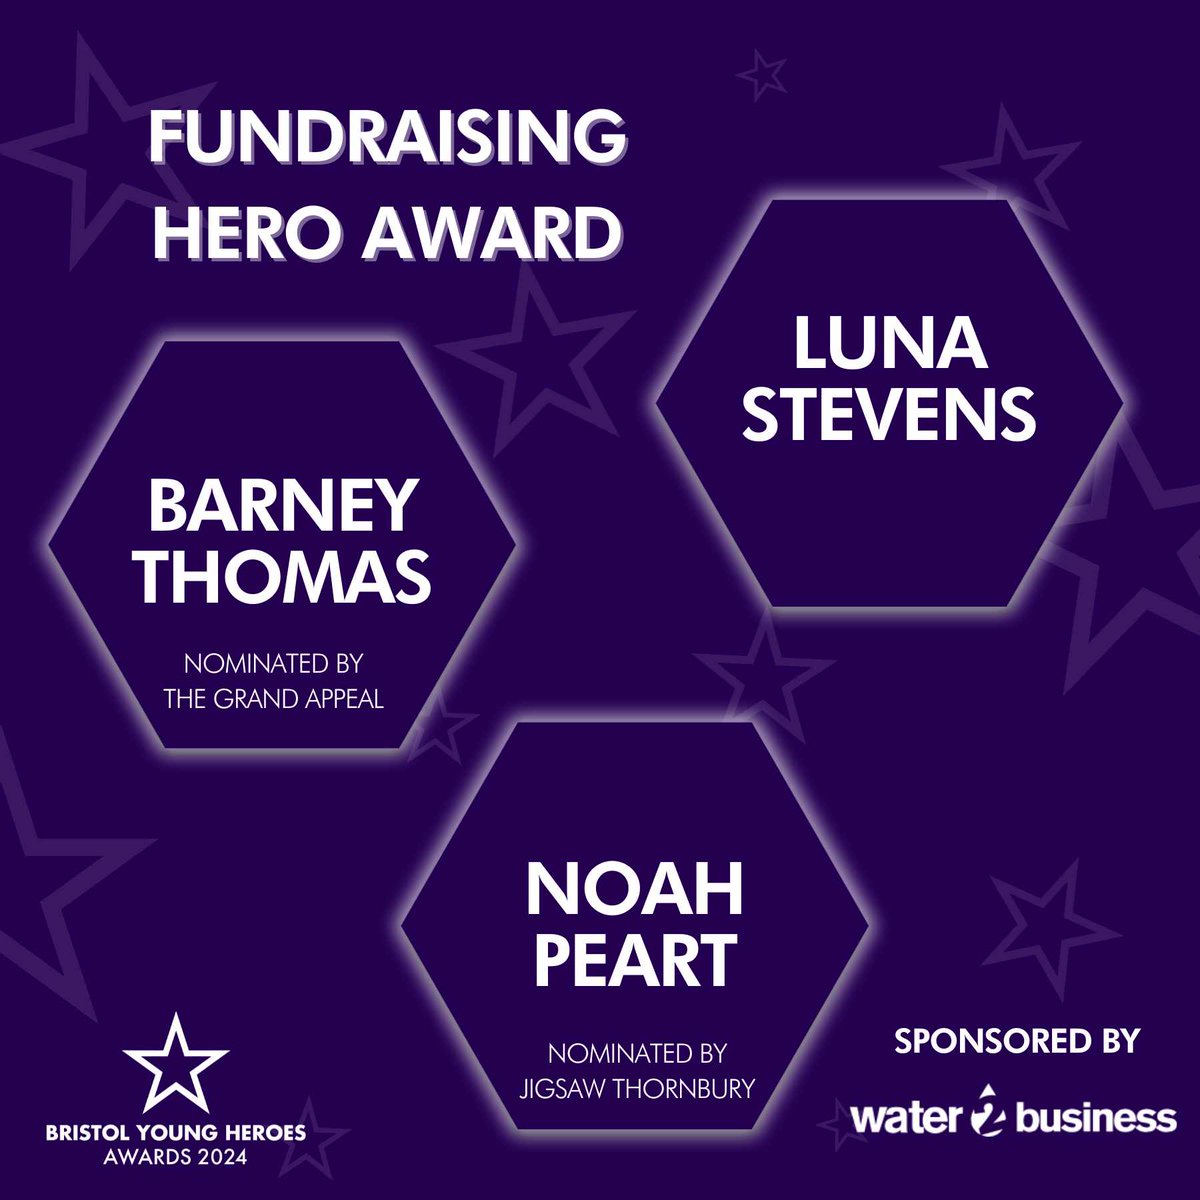 ✨Fundraising Hero Award✨ Congratulations to the finalists for the Fundraising Hero Award for the Bristol Young Hero Awards 2024! 🌟 Barney Thomas 🌟 Luna Stevens 🌟 Noah Peart Good luck 🤞 Thank you to @water2business for sponsoring the Fundraising Hero Award 🙏